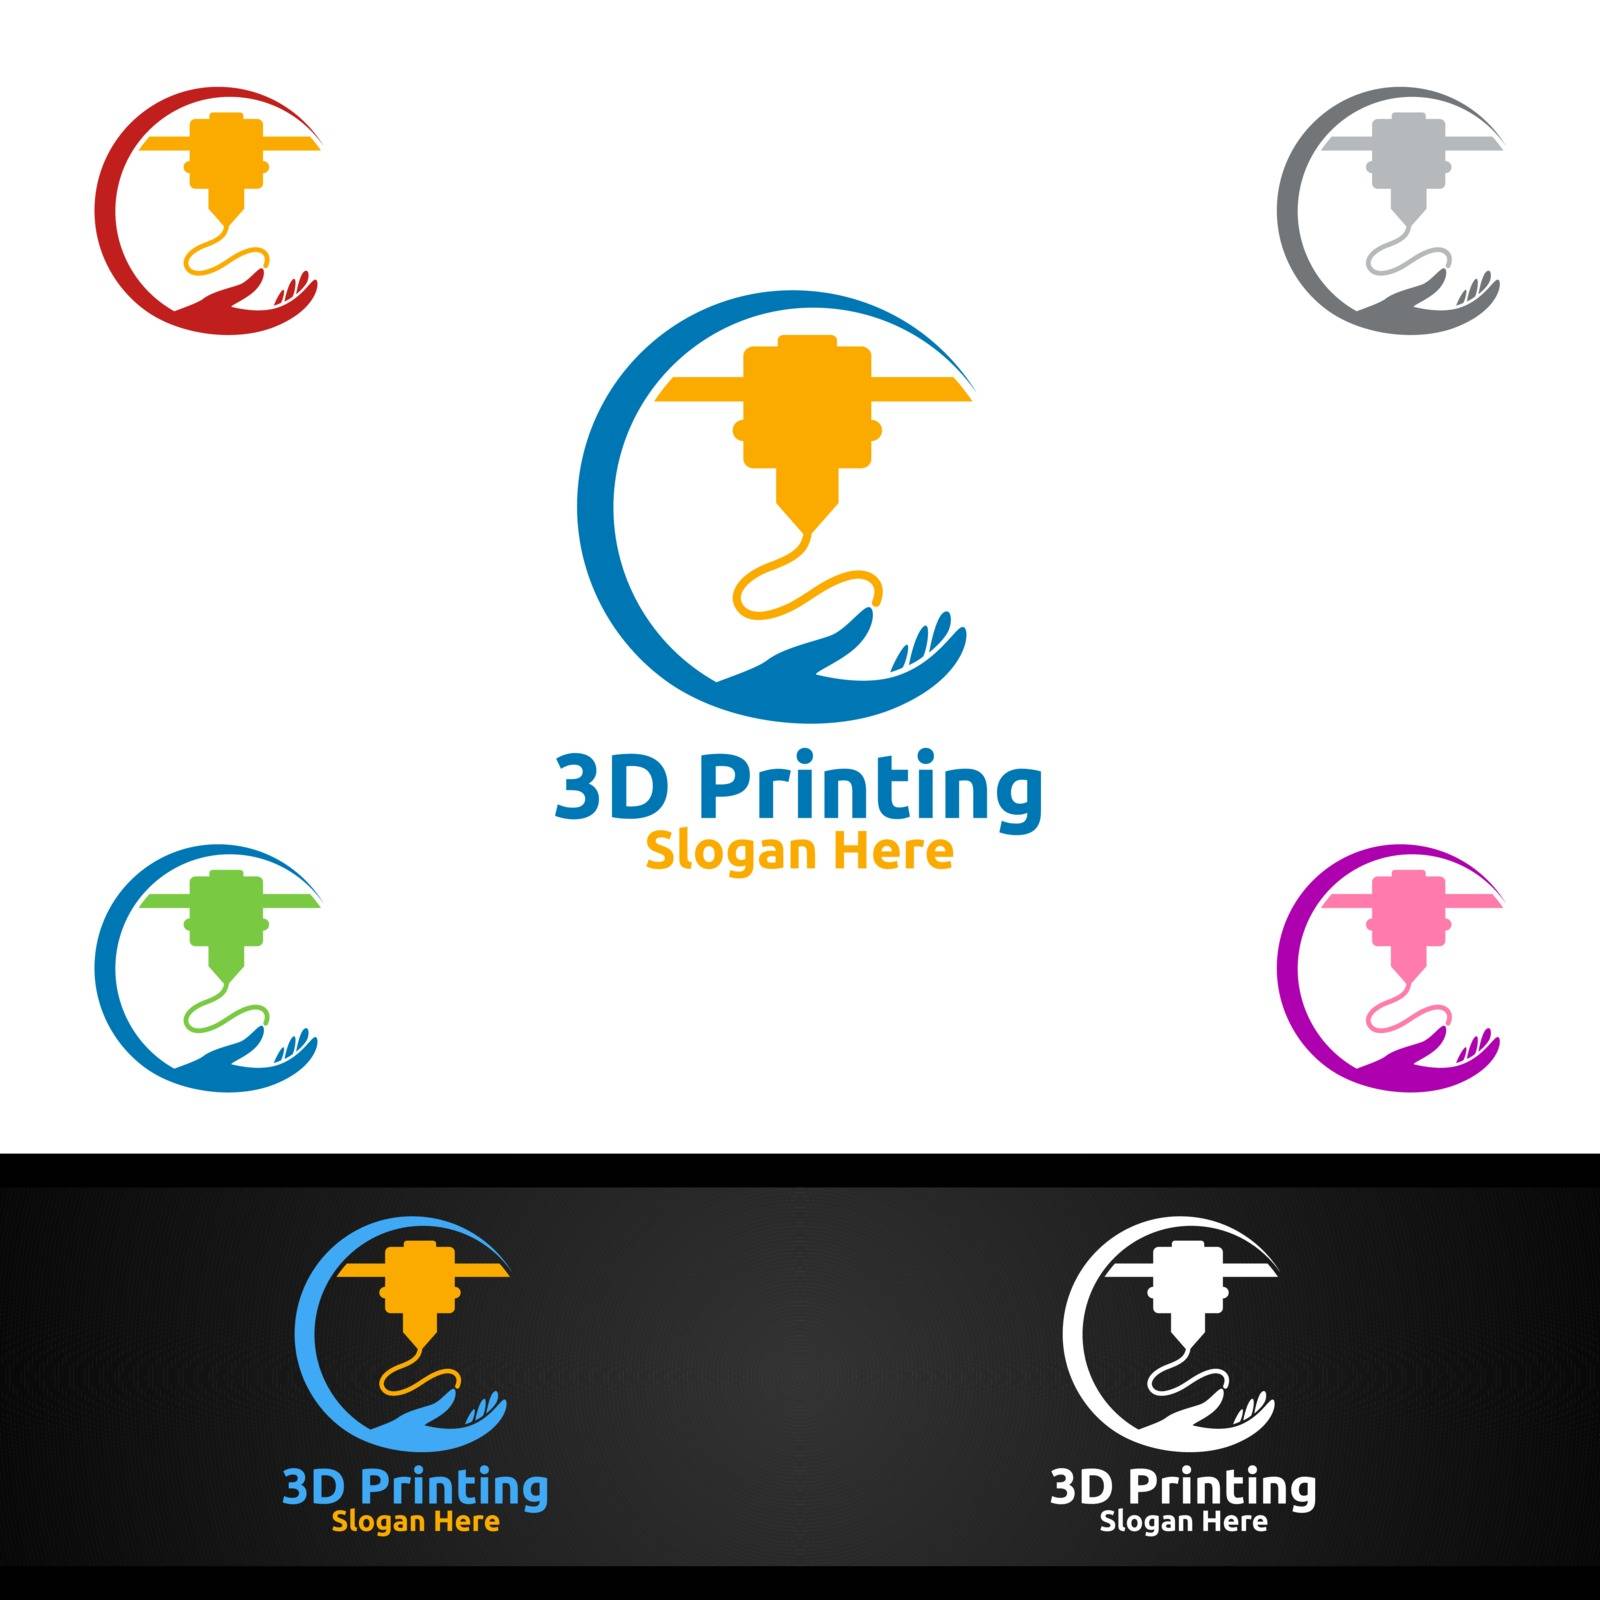 Diy 3D Printing Company Vector Logo Design for Media, Retail, Advertising, Newspaper or Book Concept